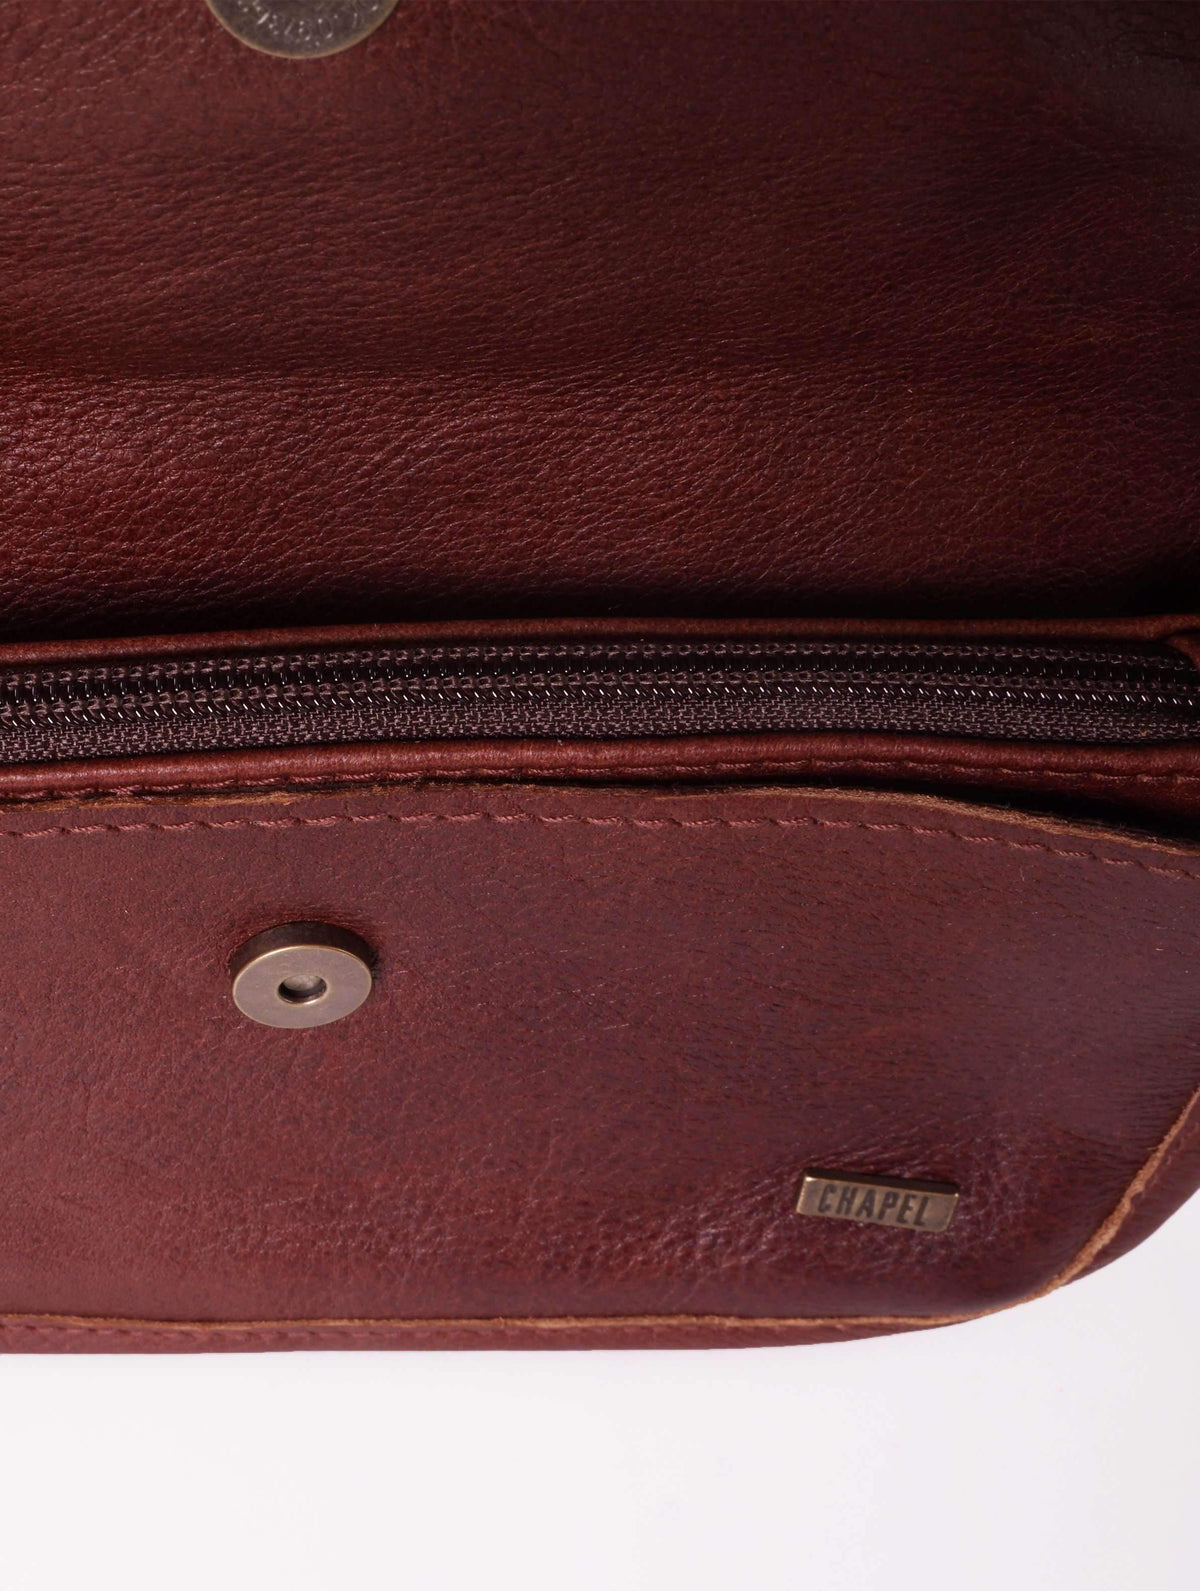 Piano Clutch - Leather Handbag Handbags CHAPEL Brandy 